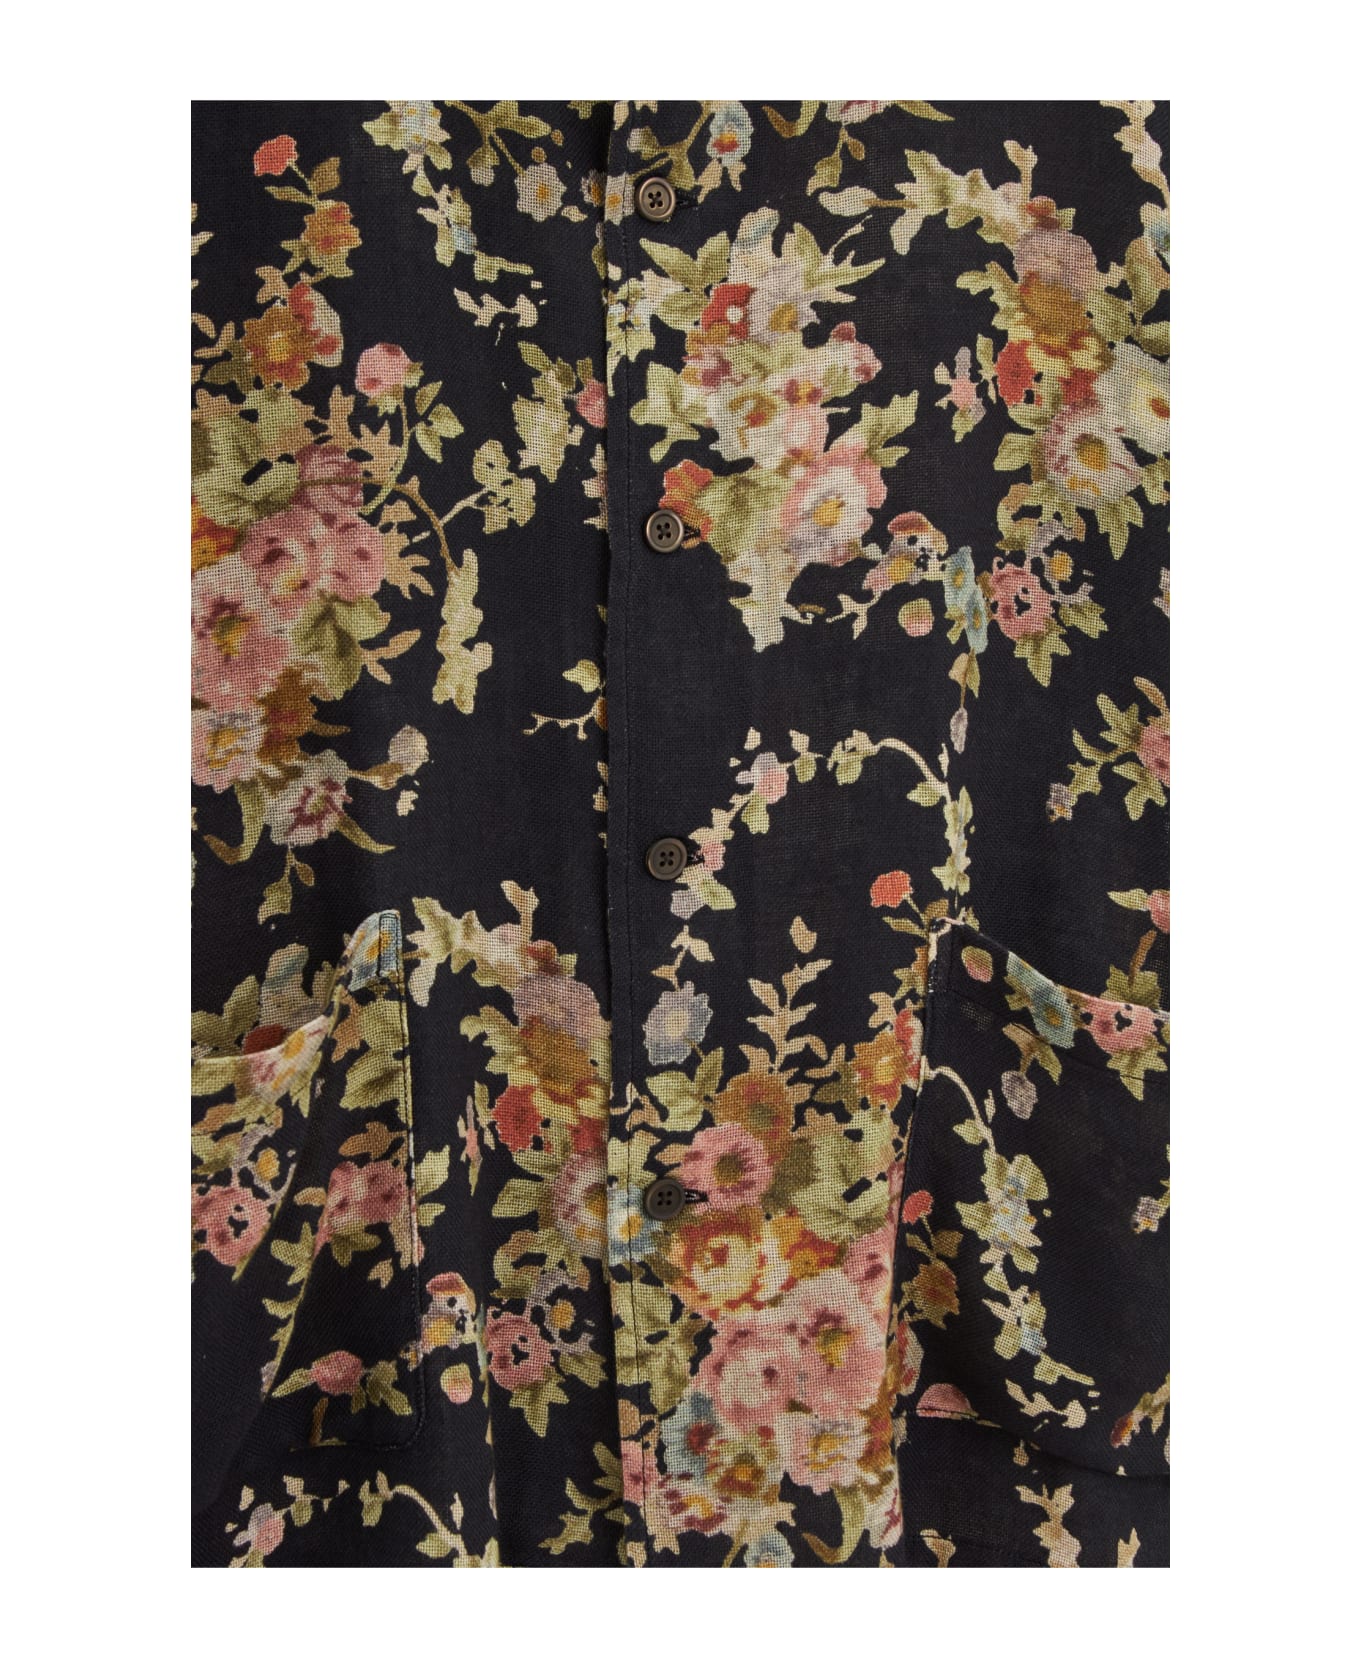 Our Legacy Elder Shortsleeve Shirt - Black Floral Tapestry Print シャツ